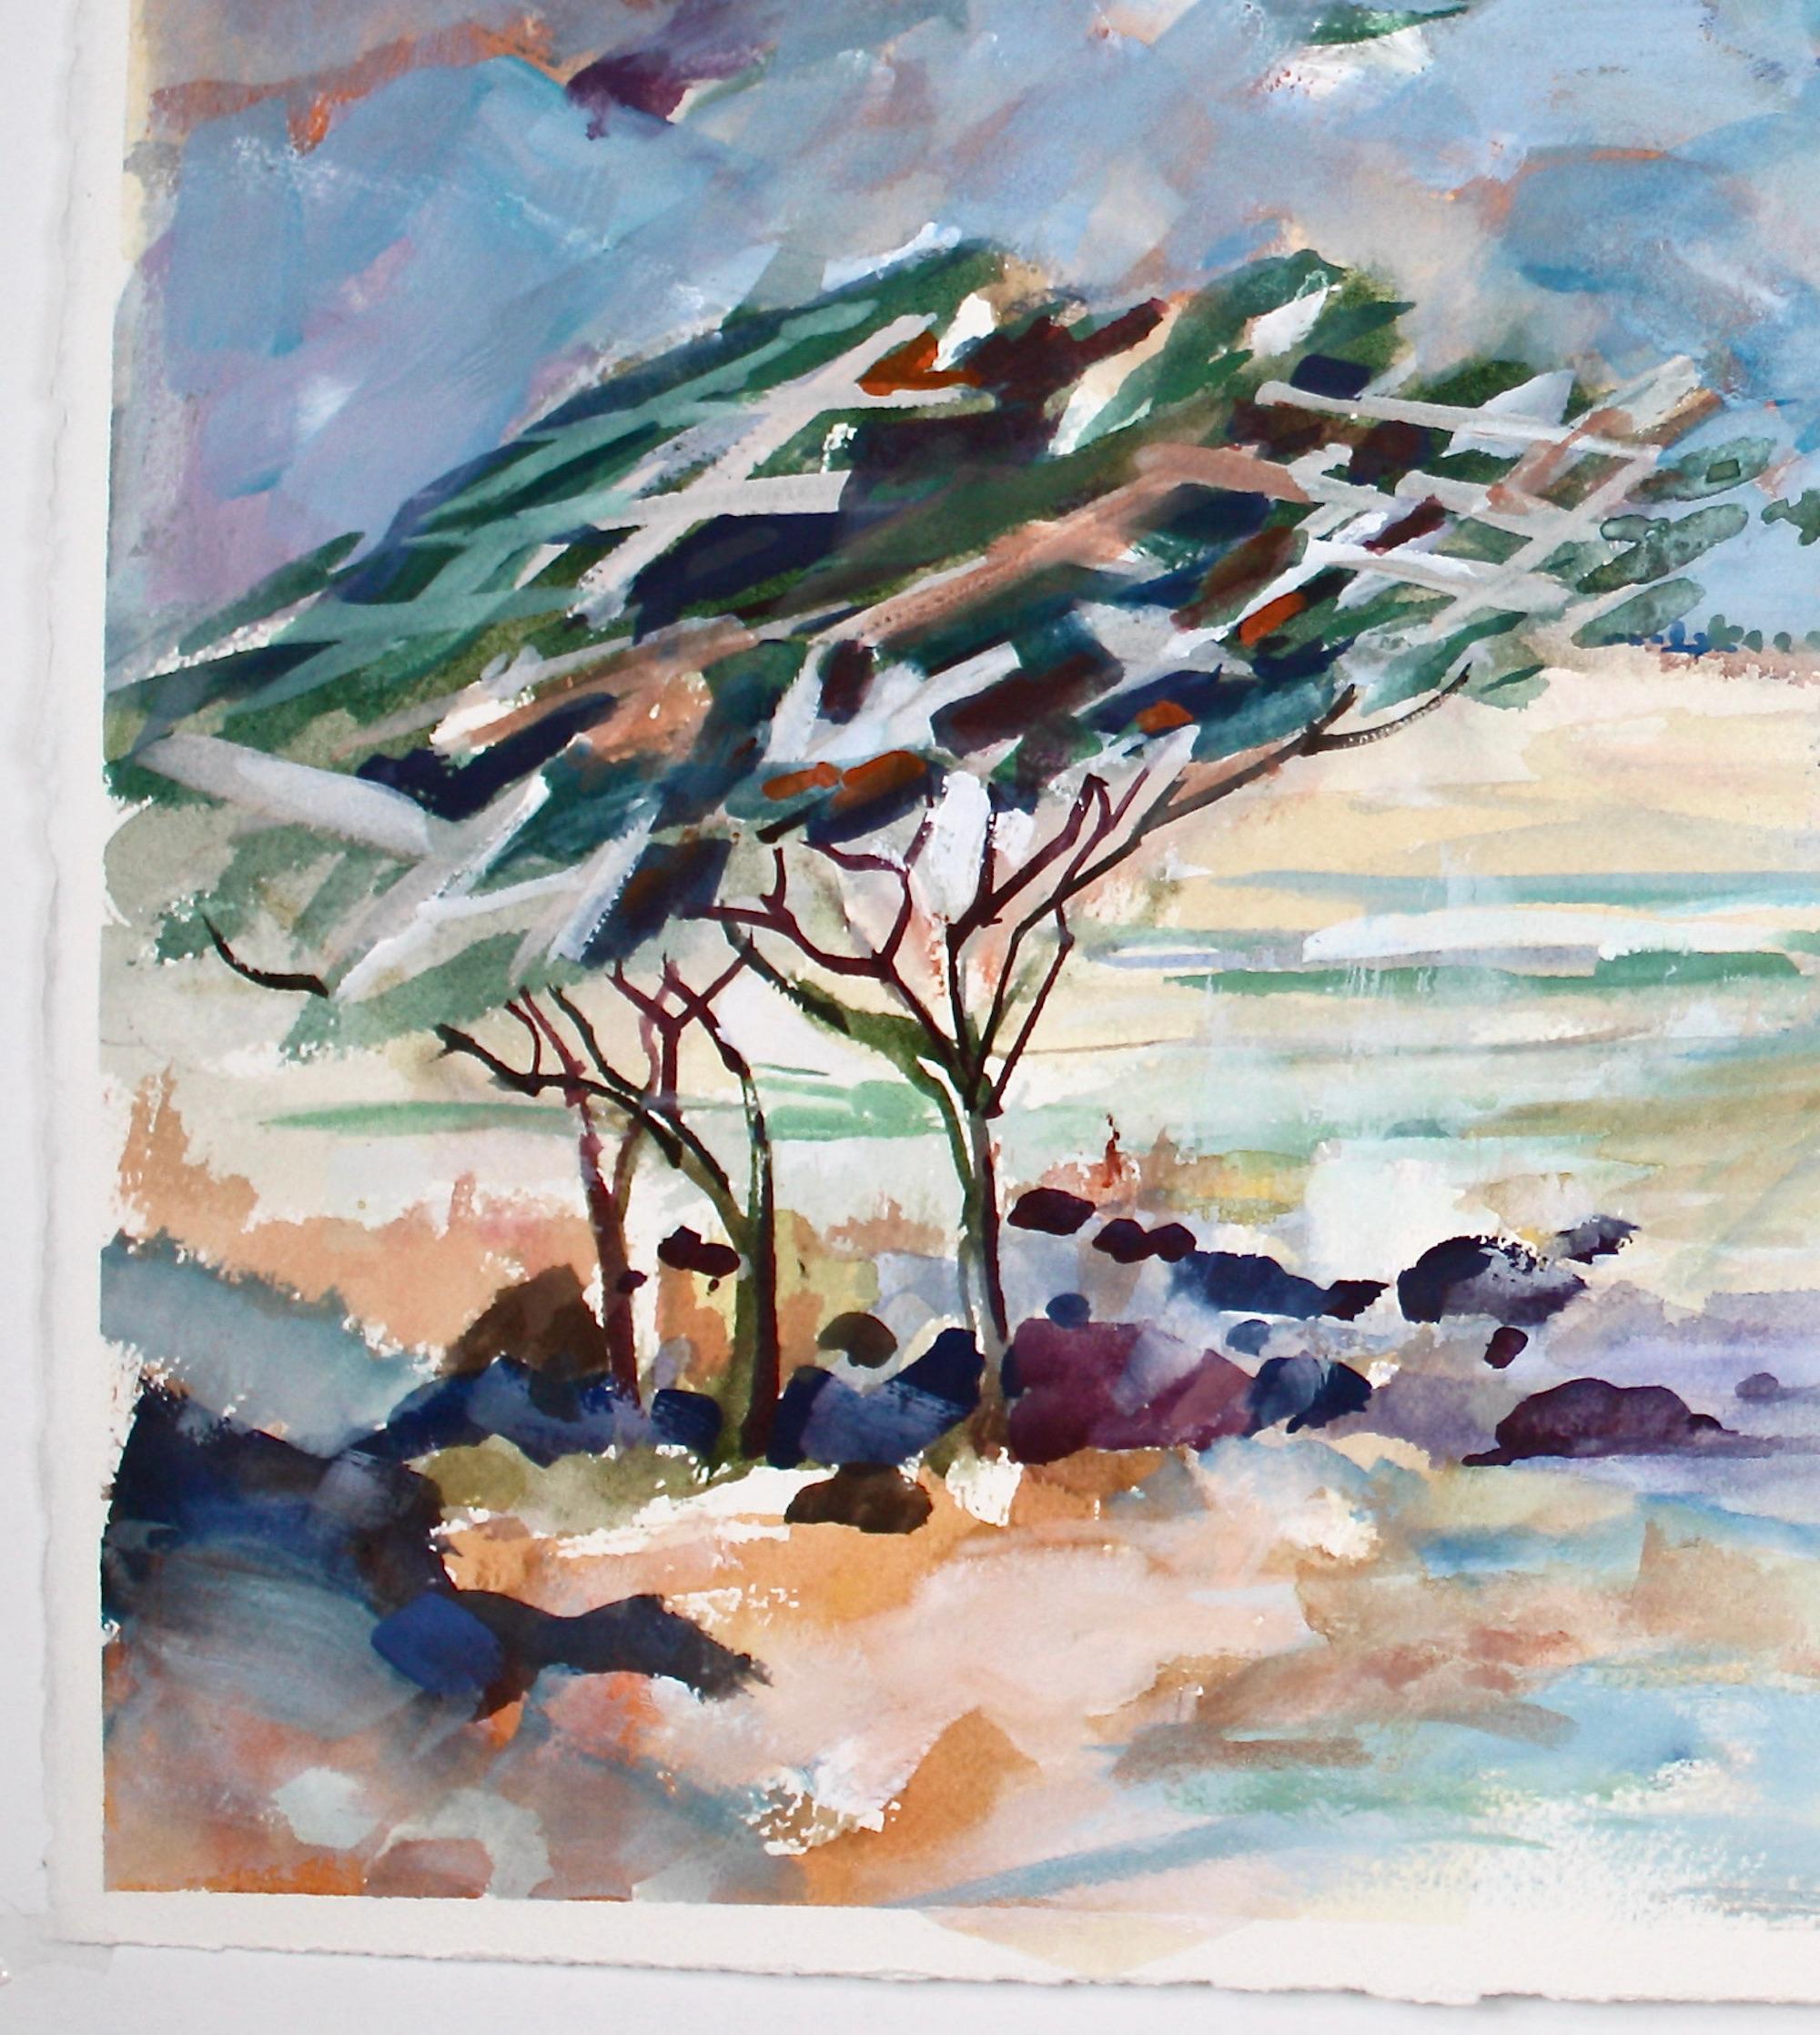 Acacia-Bäume 2, Originalgemälde (Abstrakter Expressionismus), Mixed Media Art, von Joe  Giuffrida